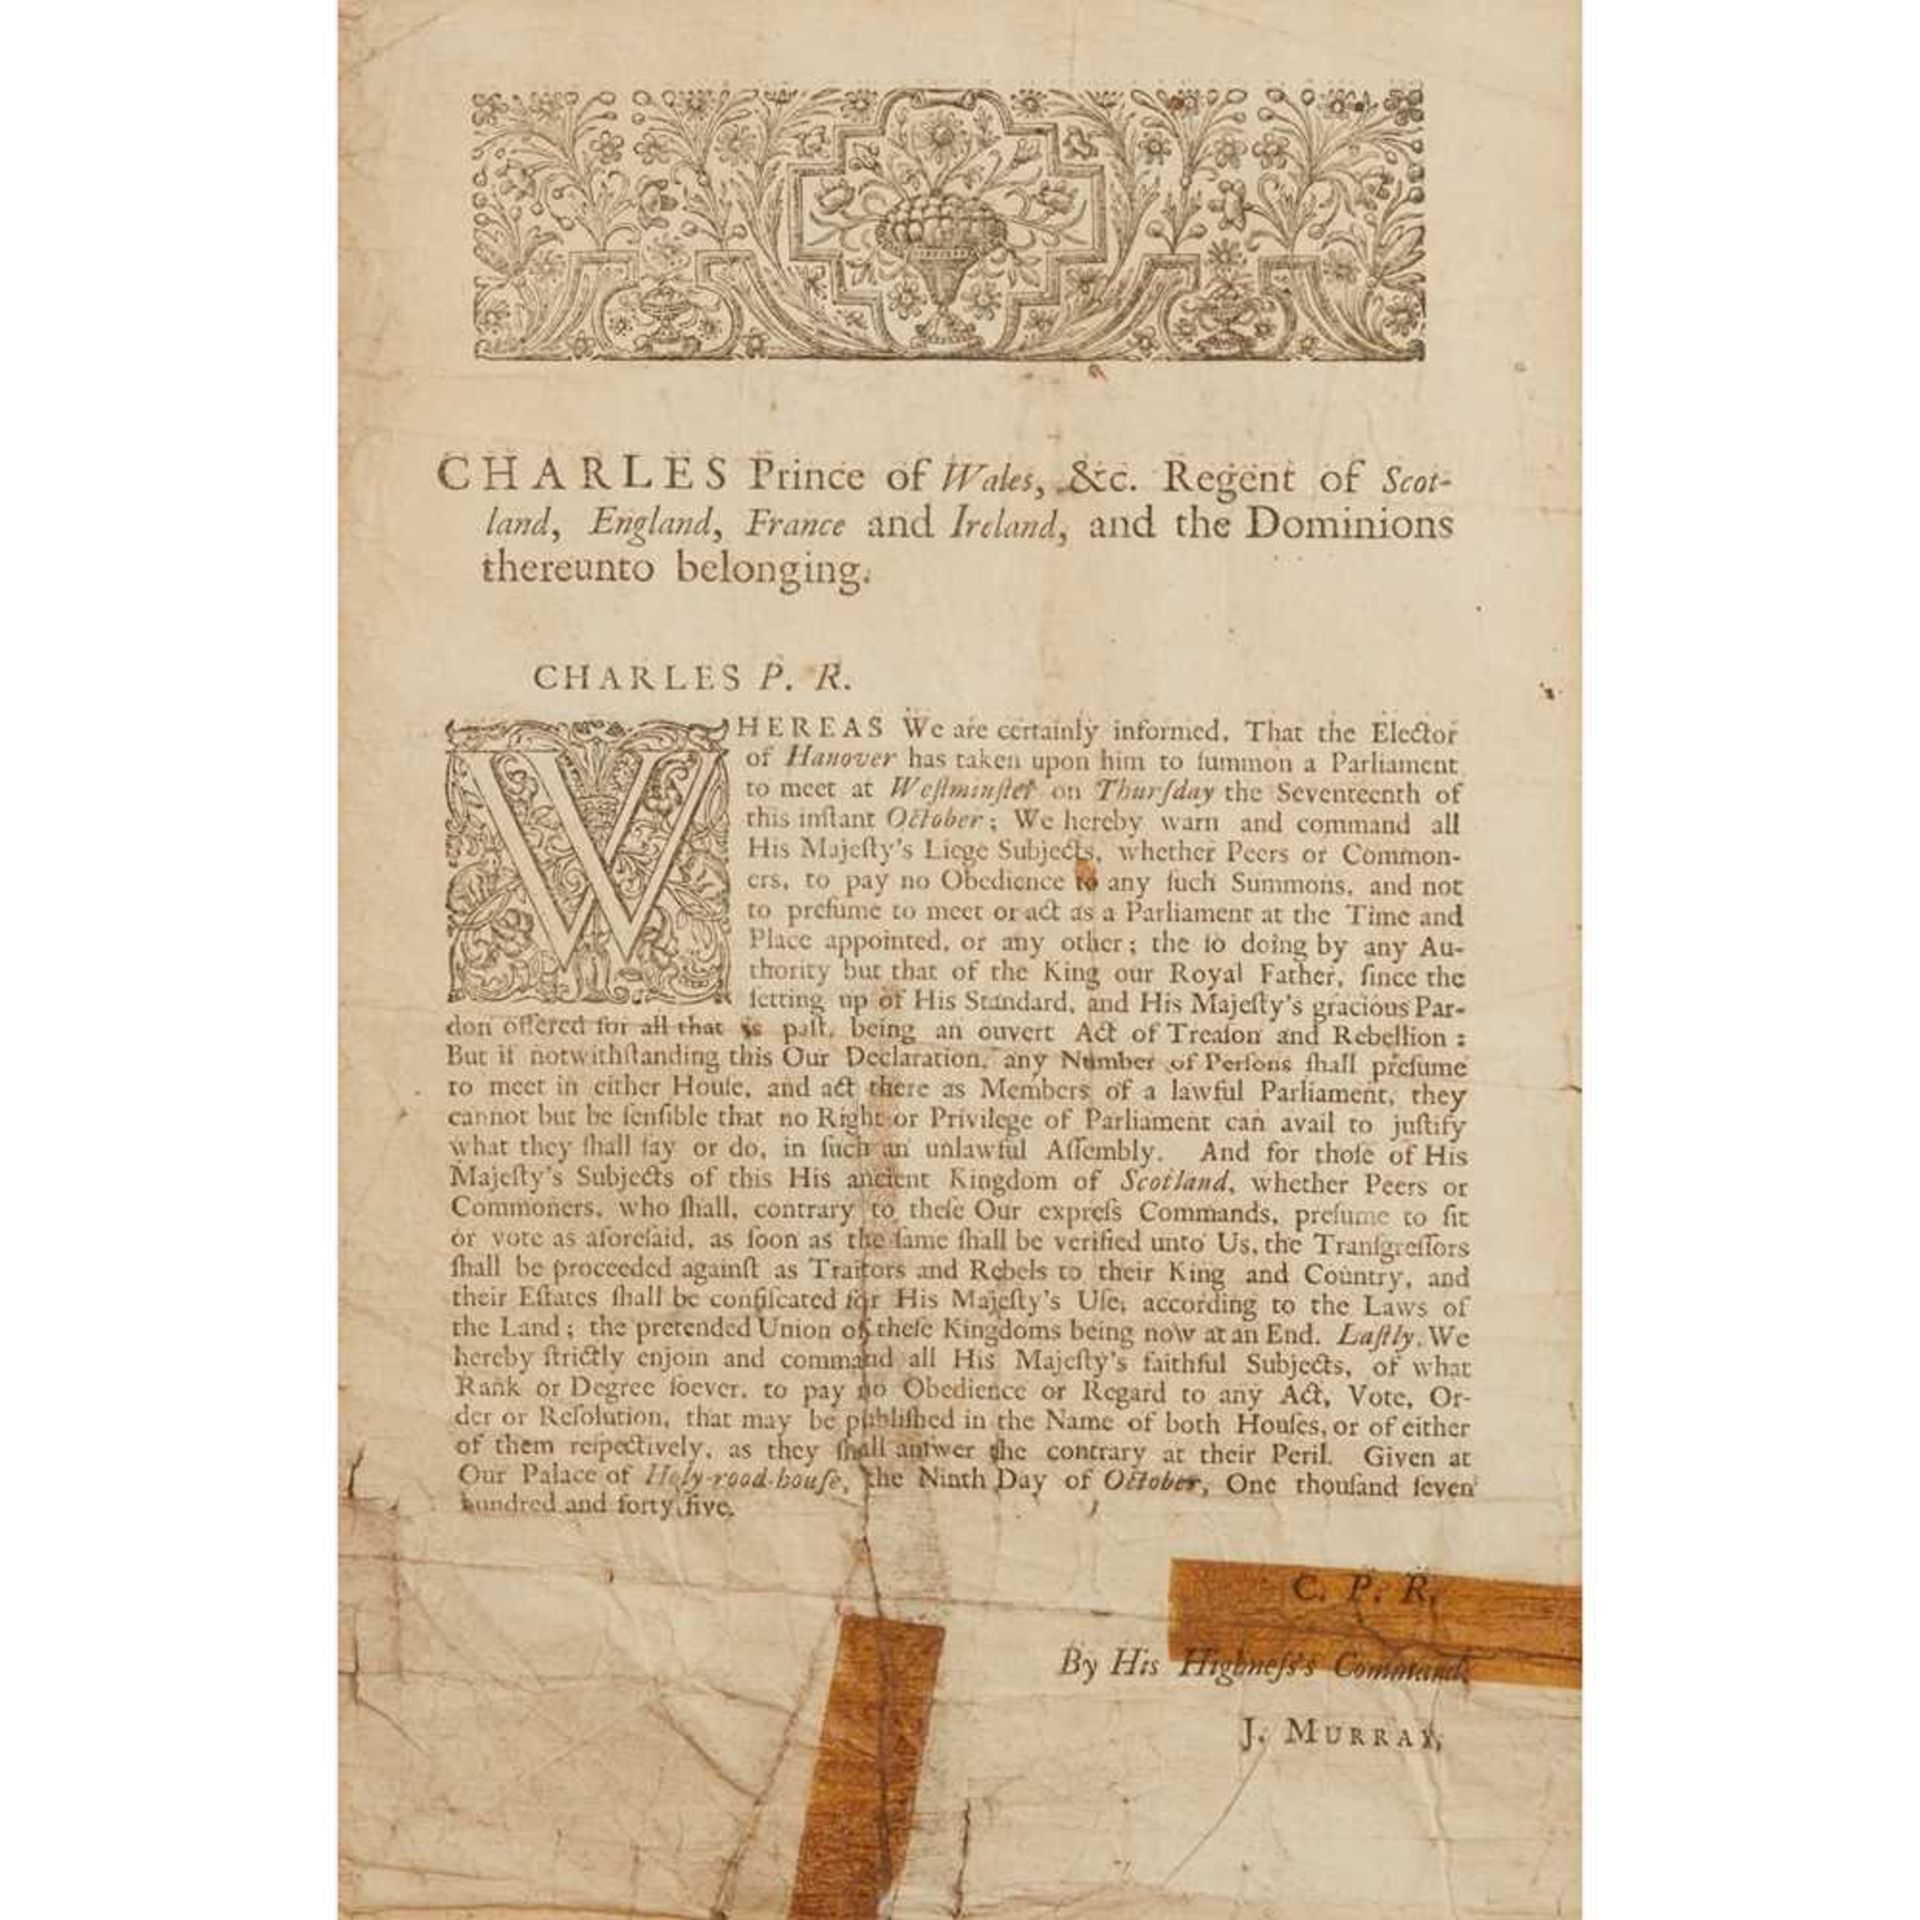 JACOBITE RISING OF 1745 RARE BROADSIDE PROCLAMATION, HOLYROOD HOUSE, 9 OCTOBER 1745